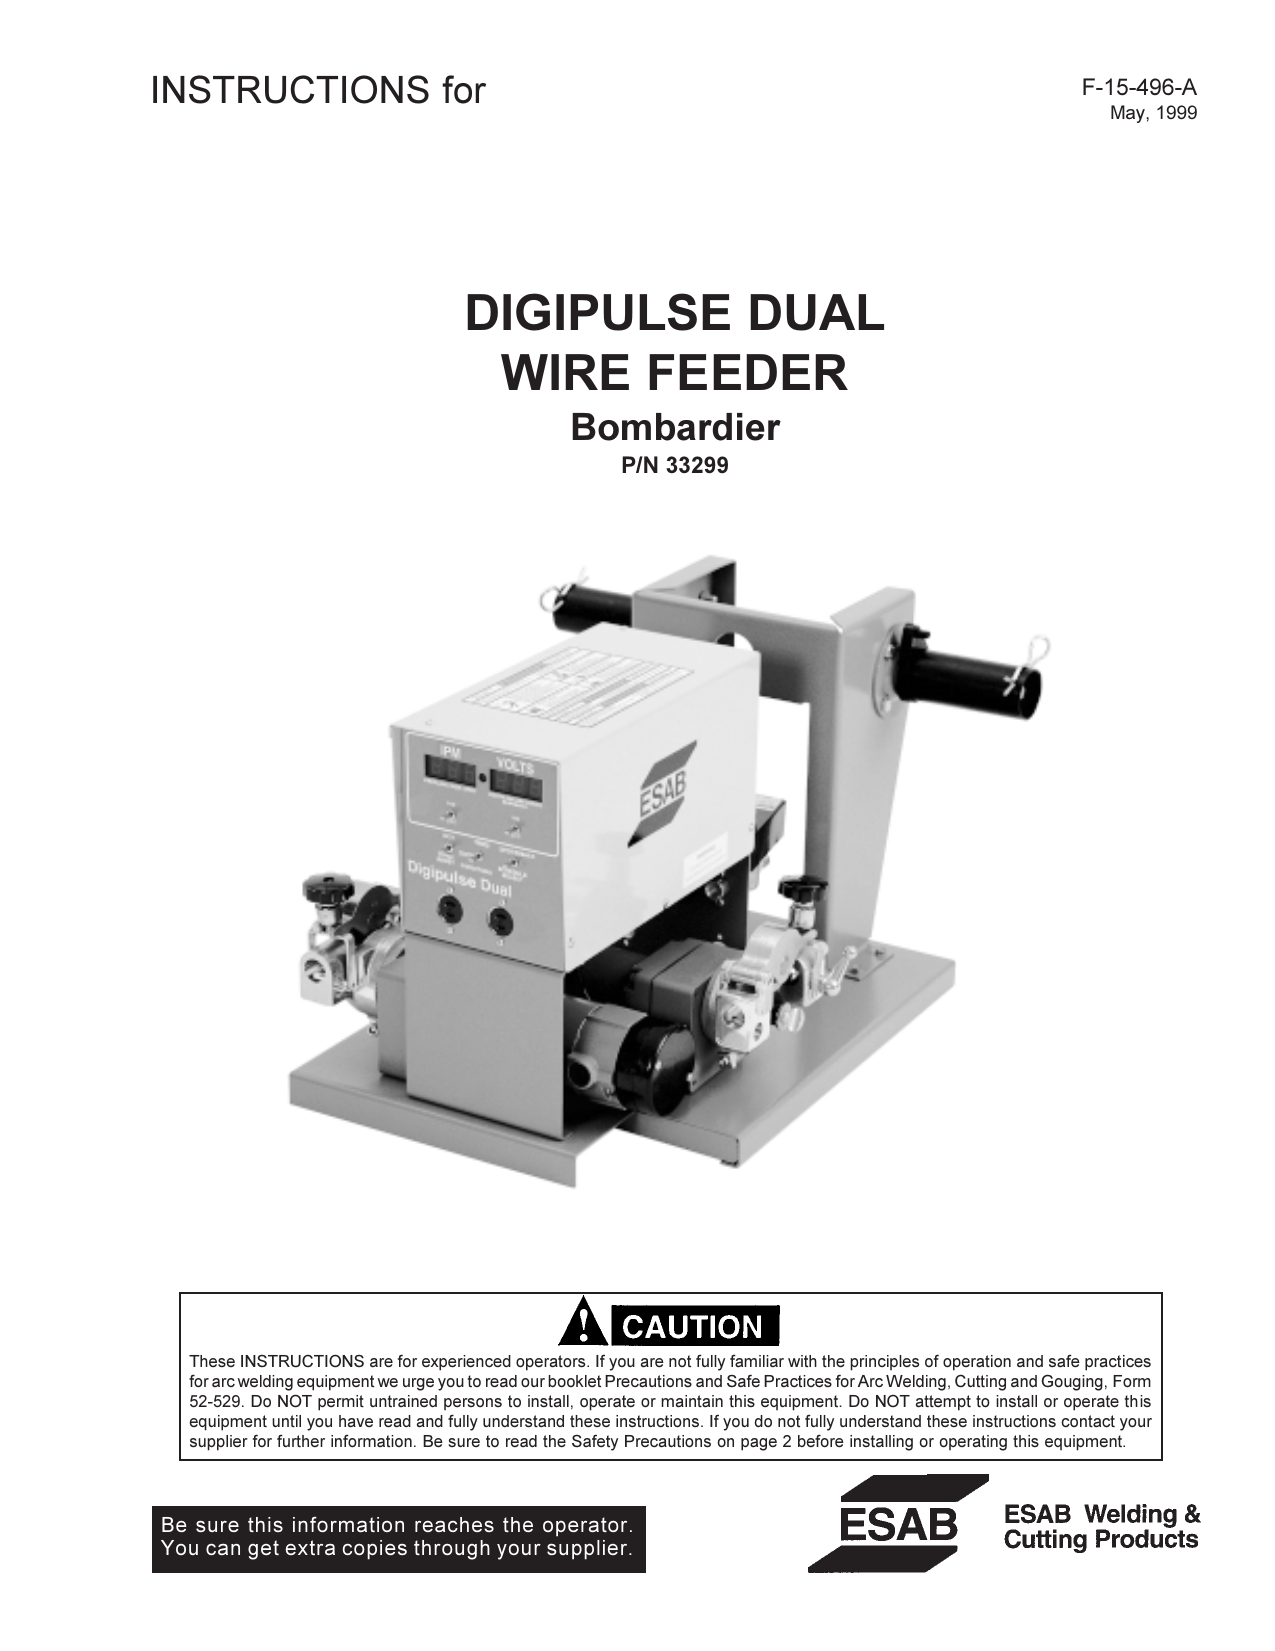 Digipulse Dual Wire Feeder Bombardier